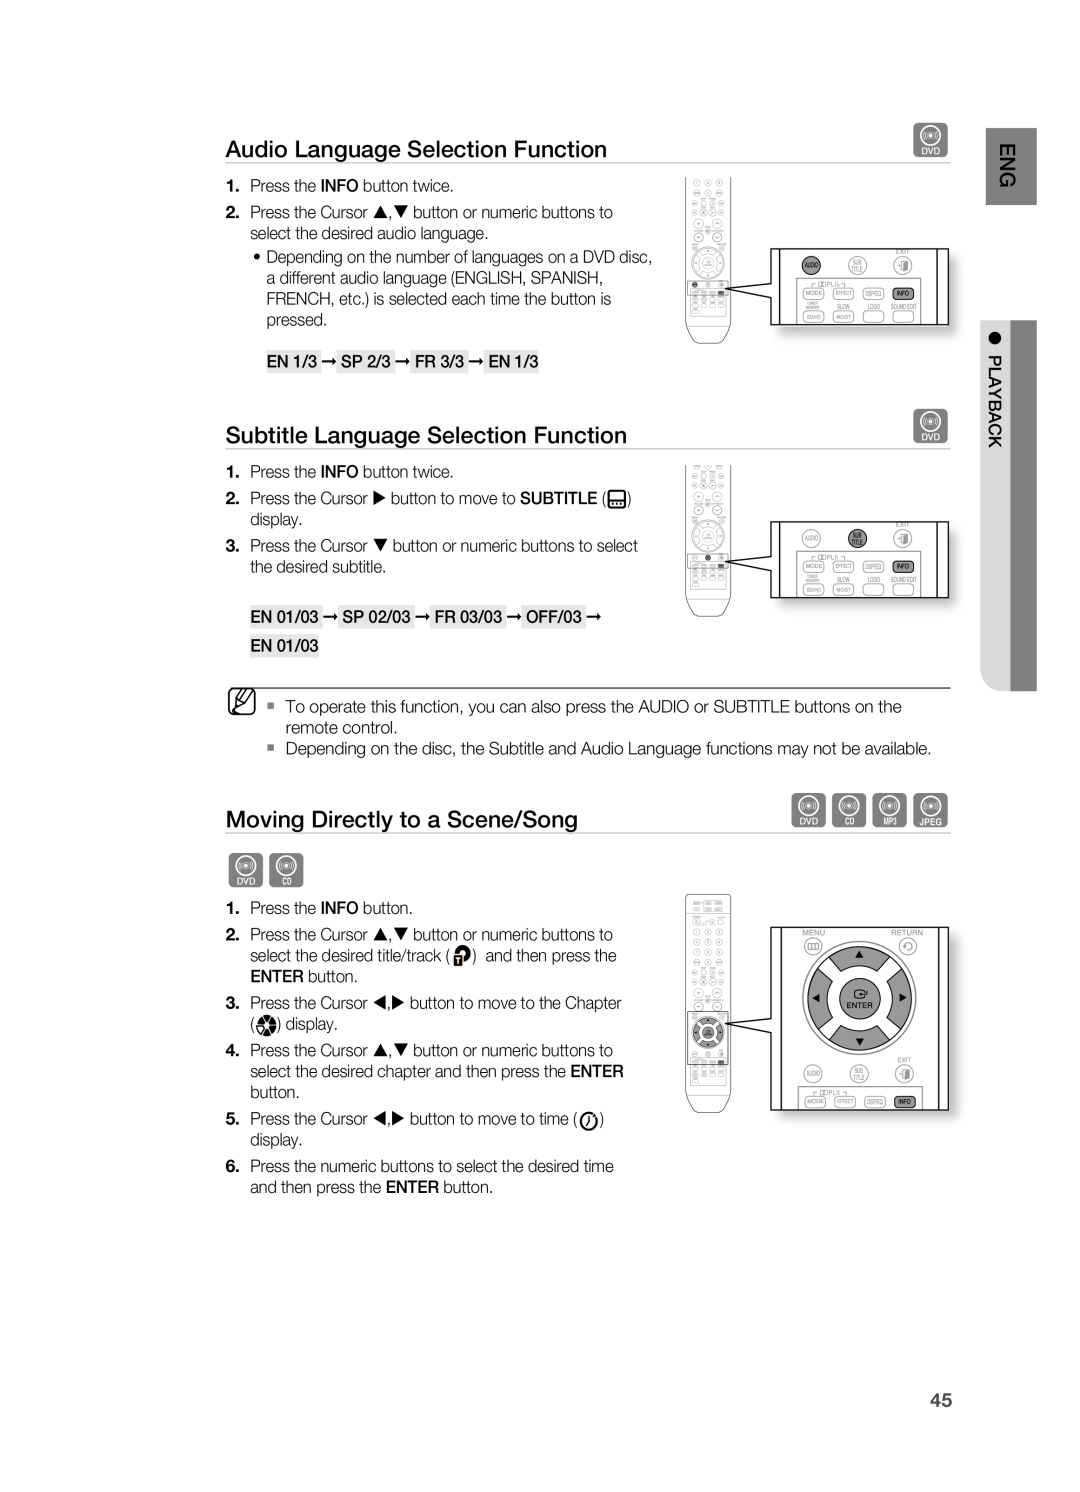 Samsung HT-TZ312 manual dBAG, audio Language Selection function, Subtitle Language Selection function 